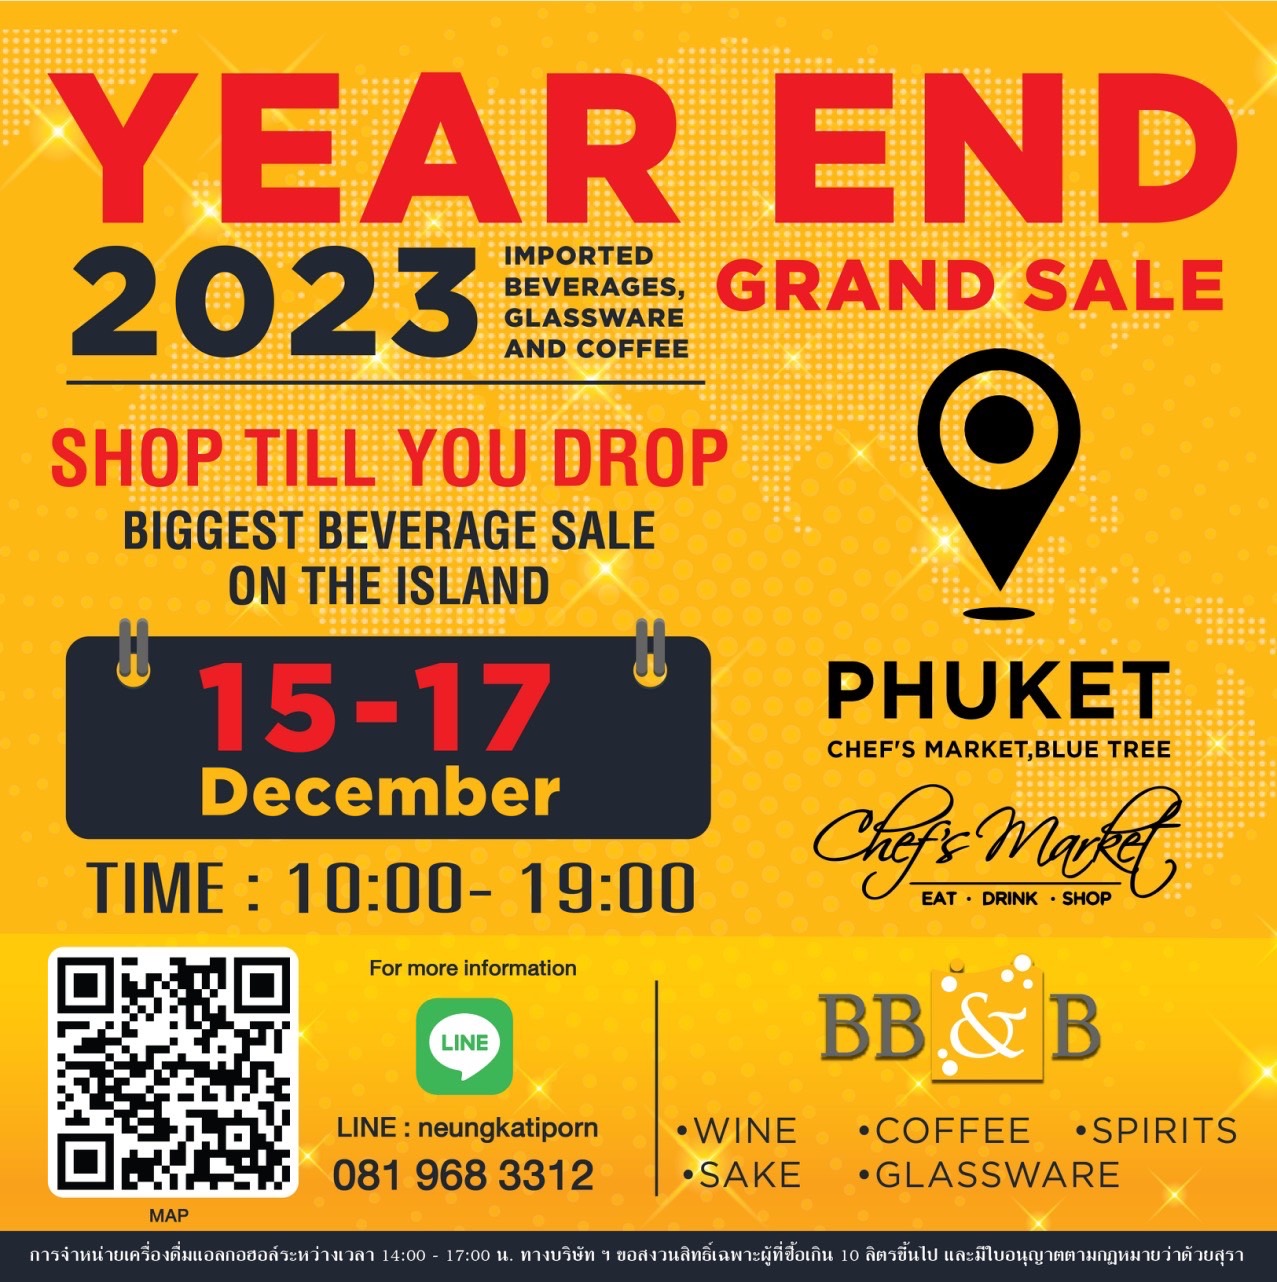 BB&B PHUKET - YEAR END GRAND SALE 2023